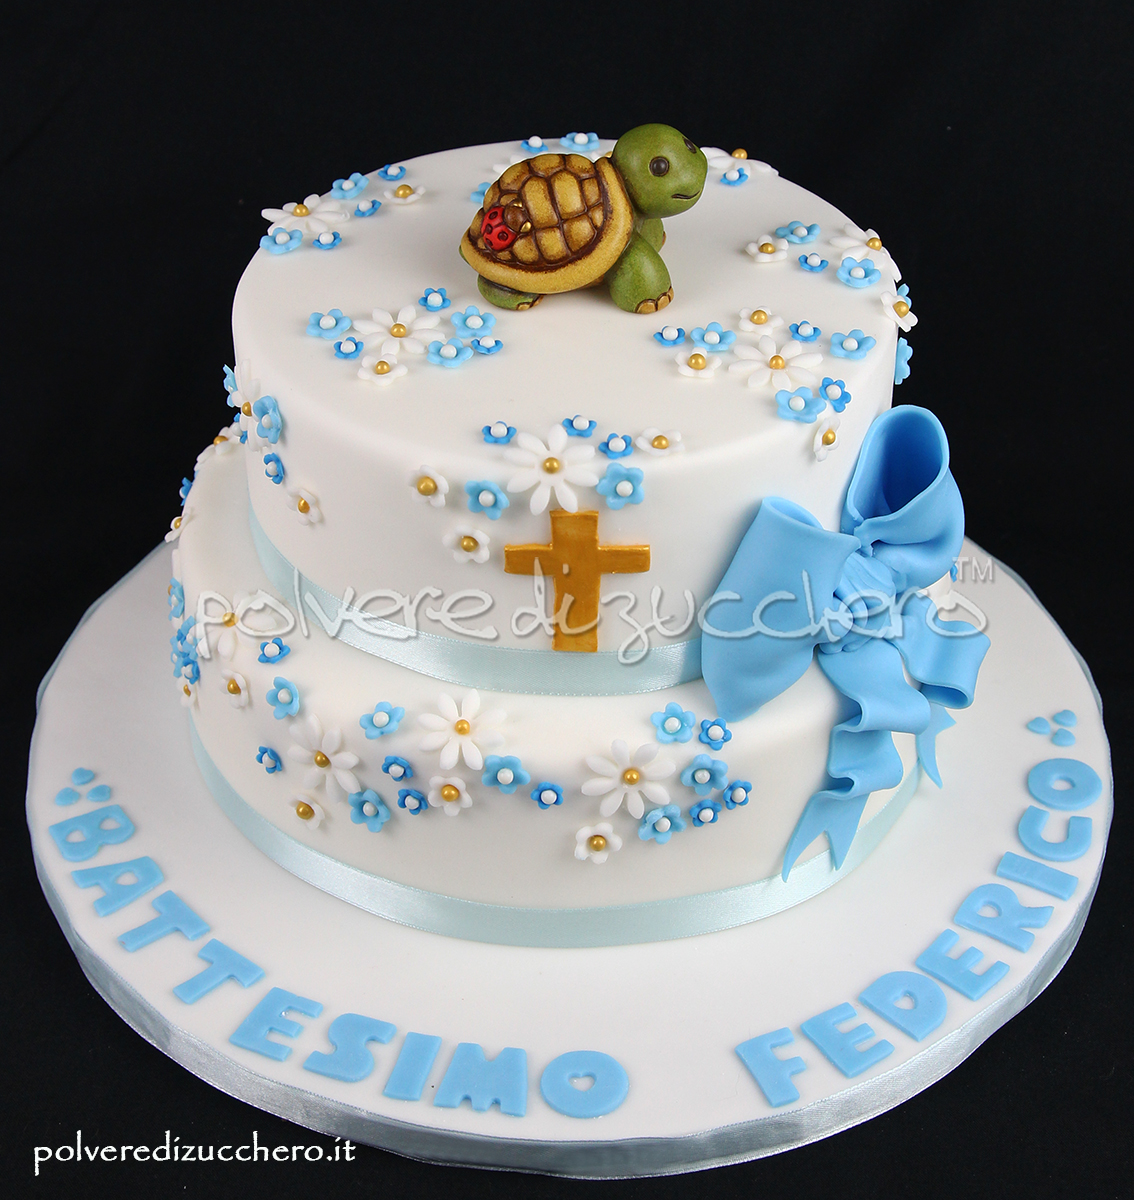 cake design torta decorata pasta di zucchero battesimo tartaruga thun fiori croce fiocco fondant paste baptsim turtle flower cross bow